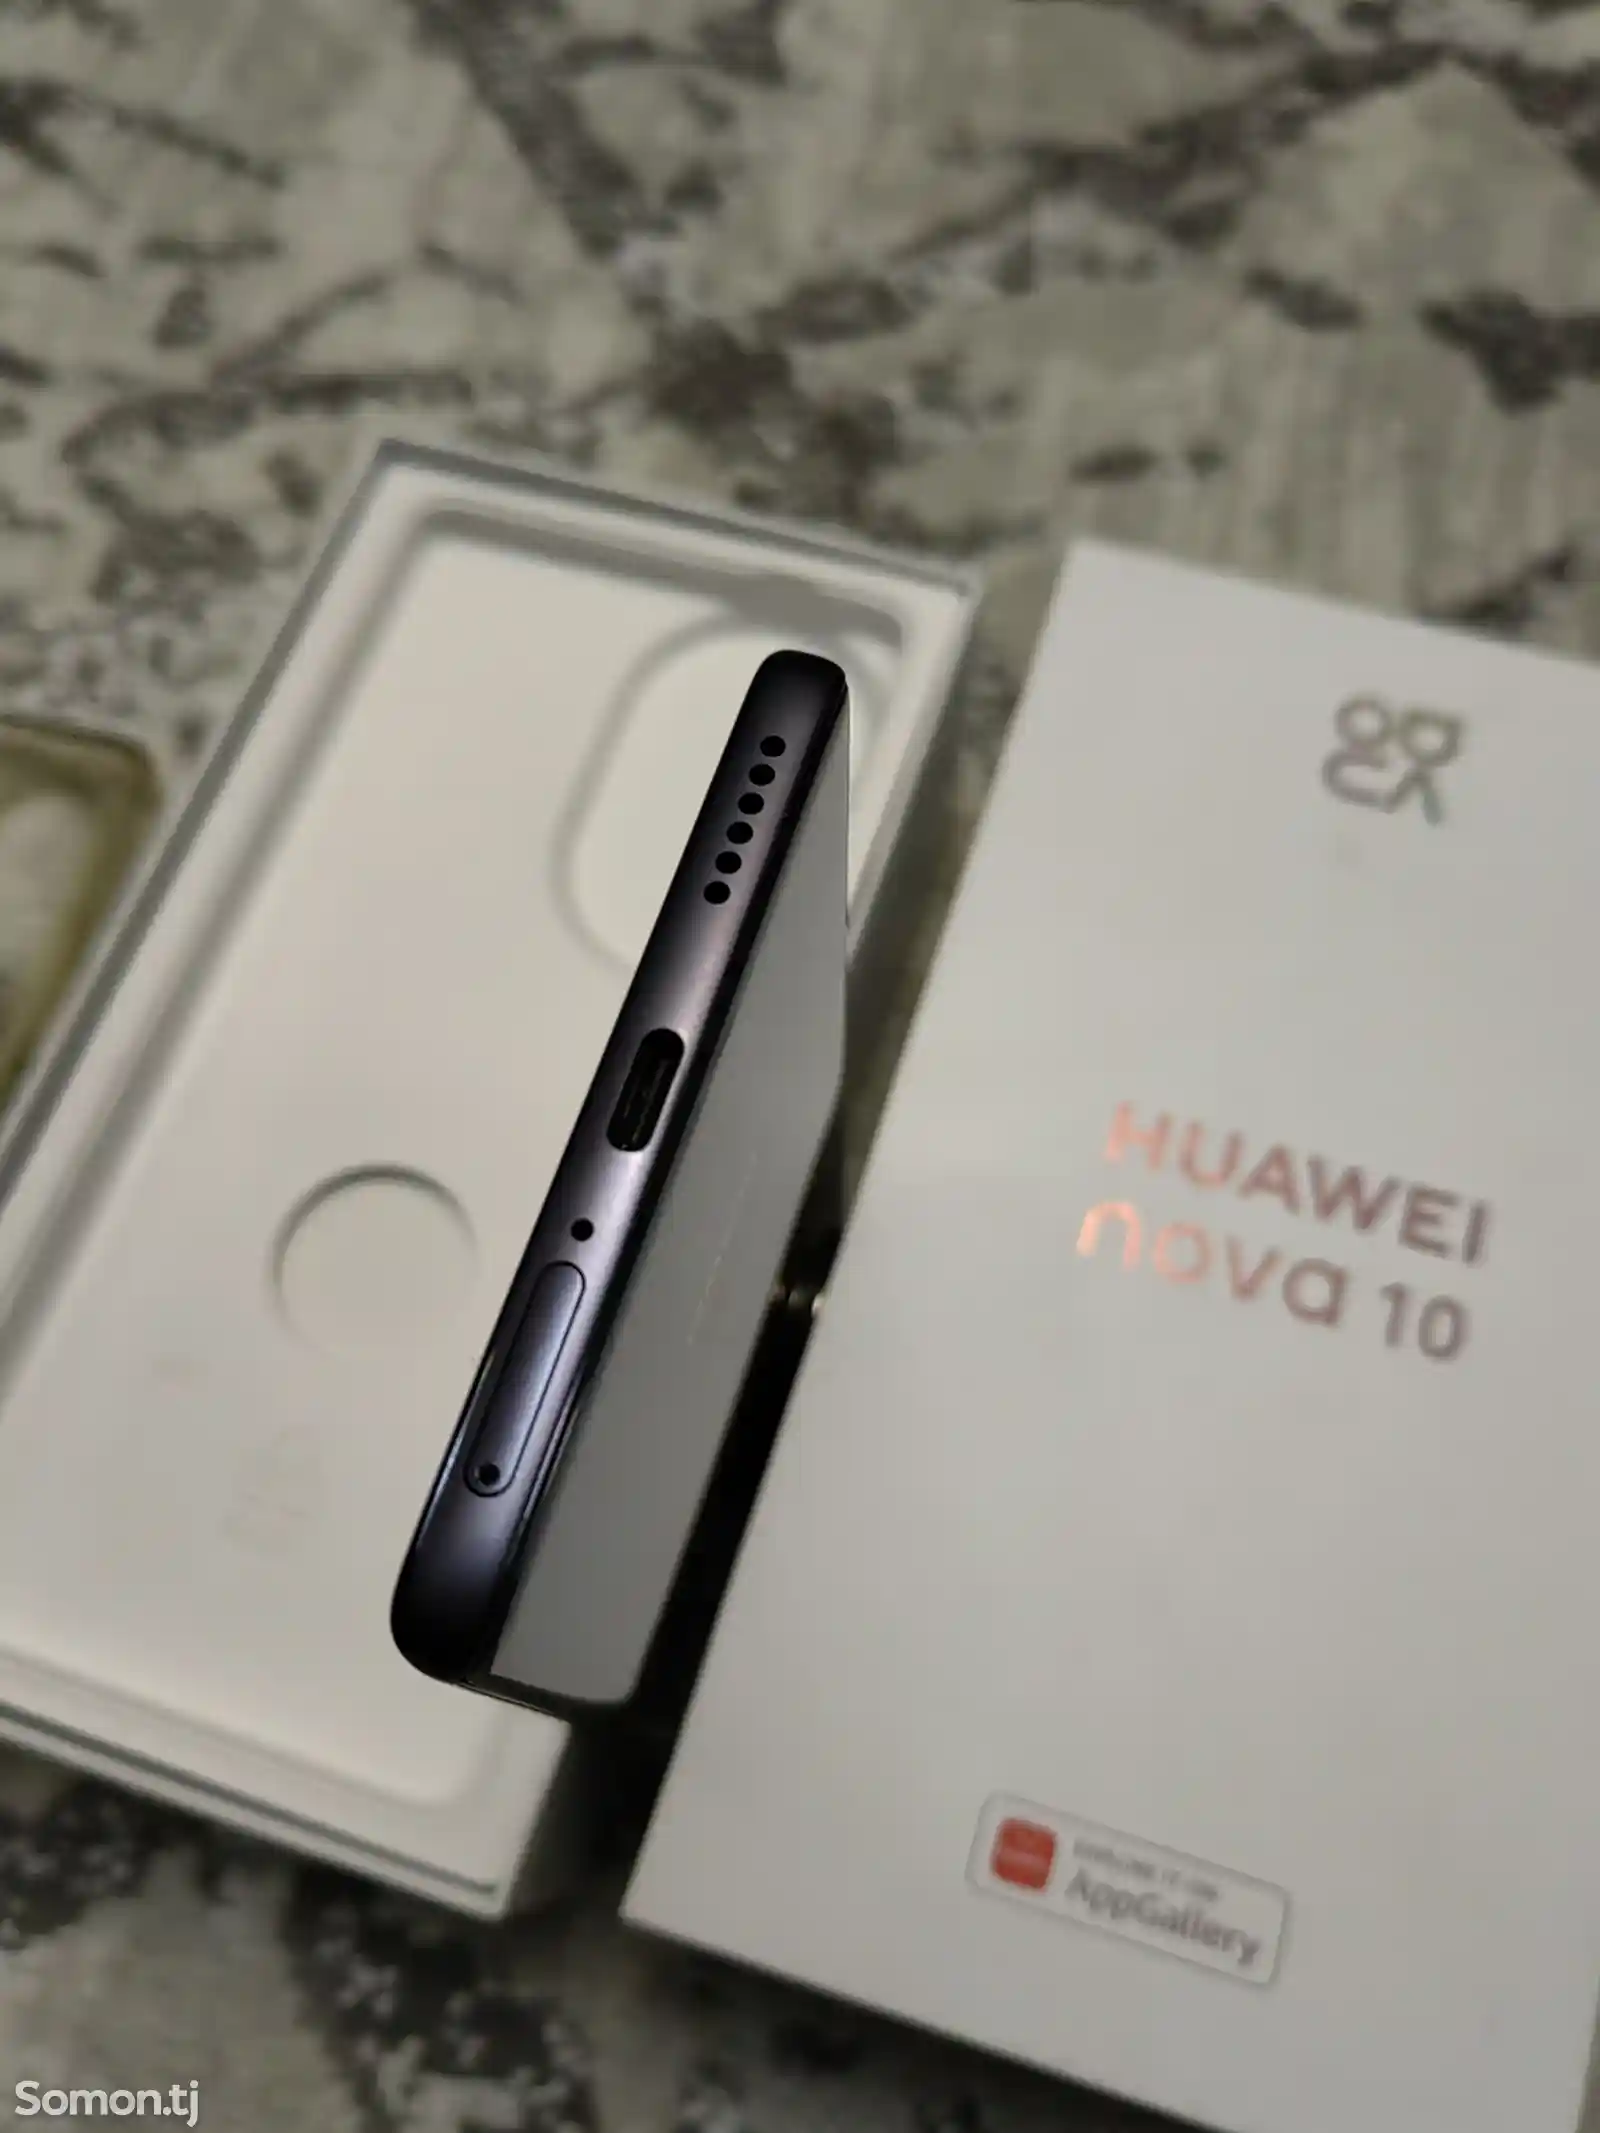 Huawei Nova 10 Black-12